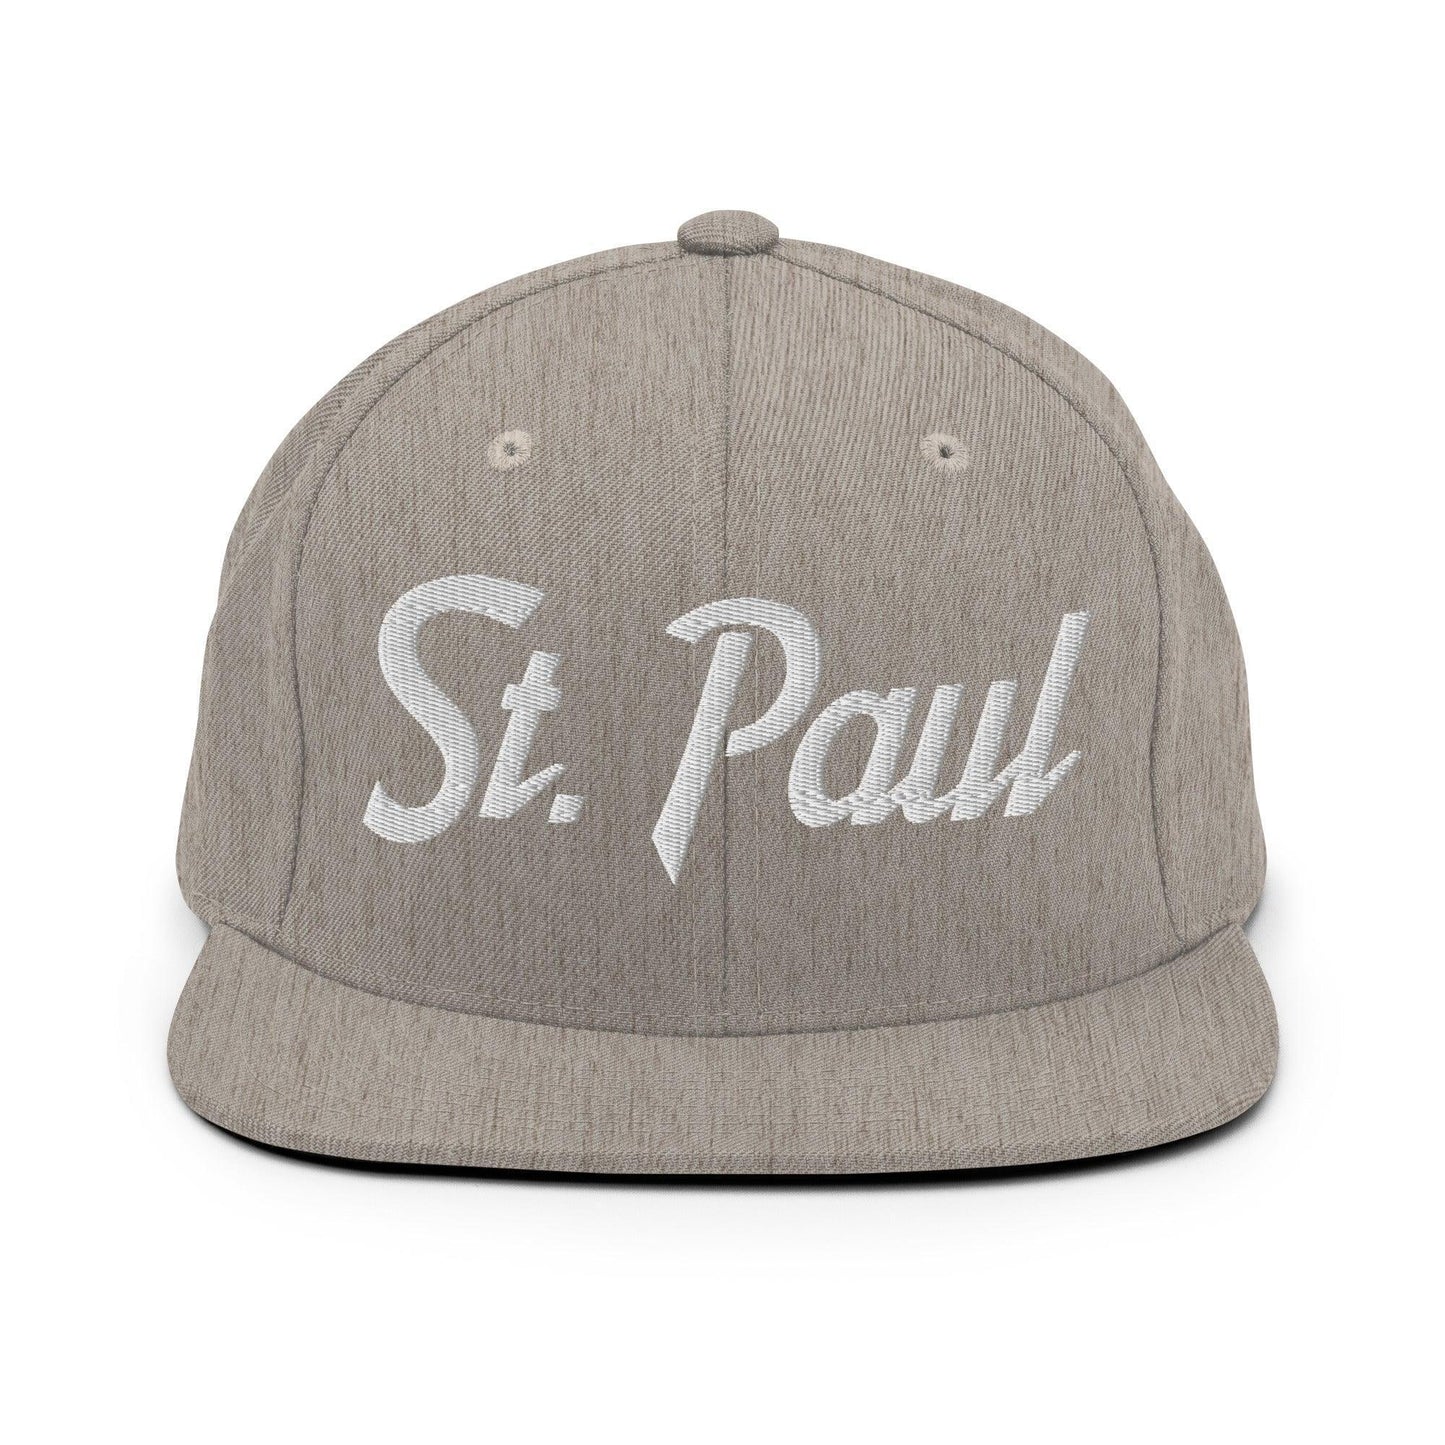 St. Paul Script Snapback Hat Heather Grey